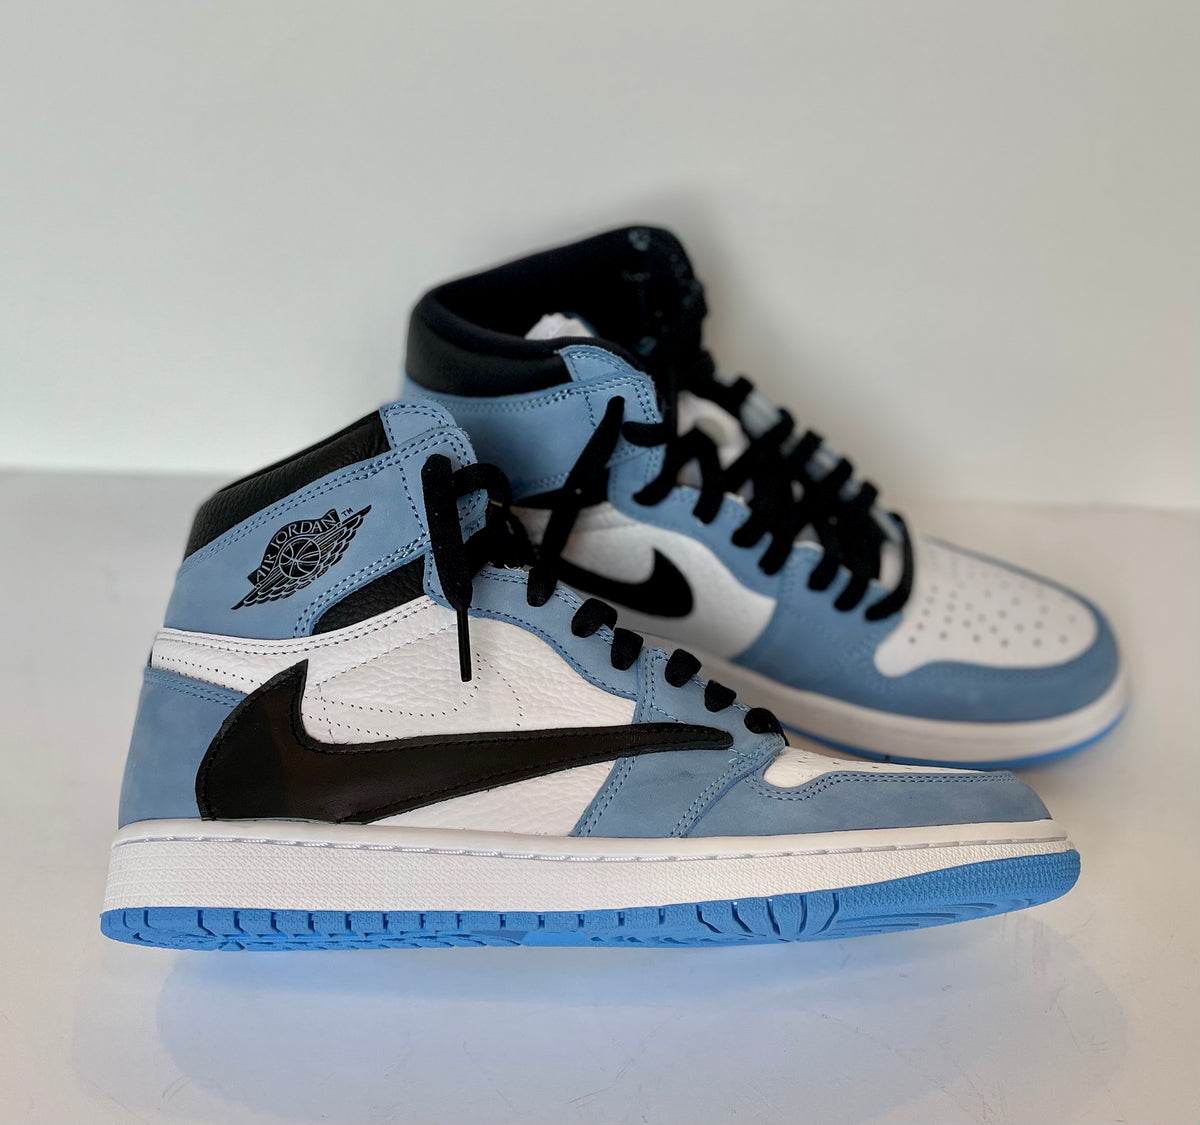 Nike Air Jordan 10 Blue Suede Customs